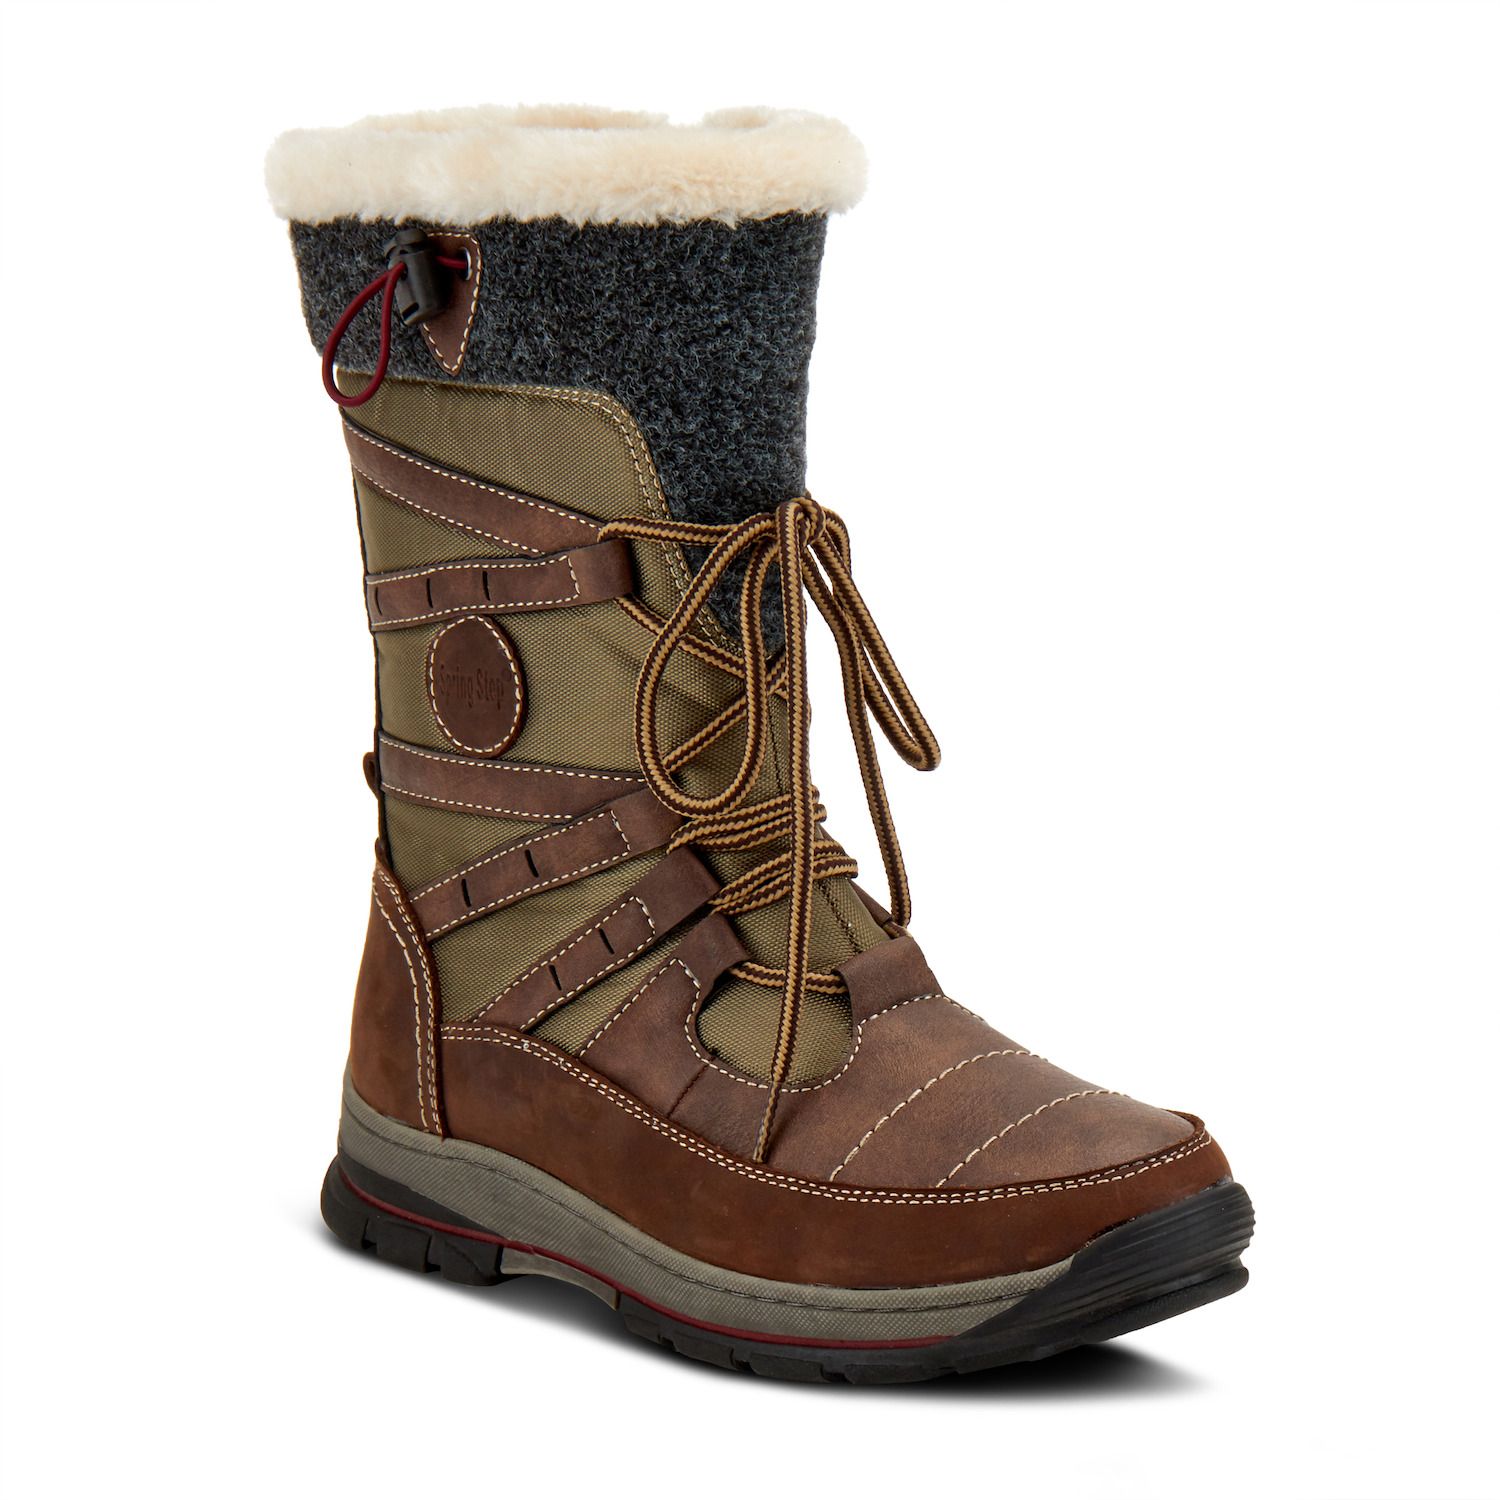 ryka namaste women's winter ankle boots